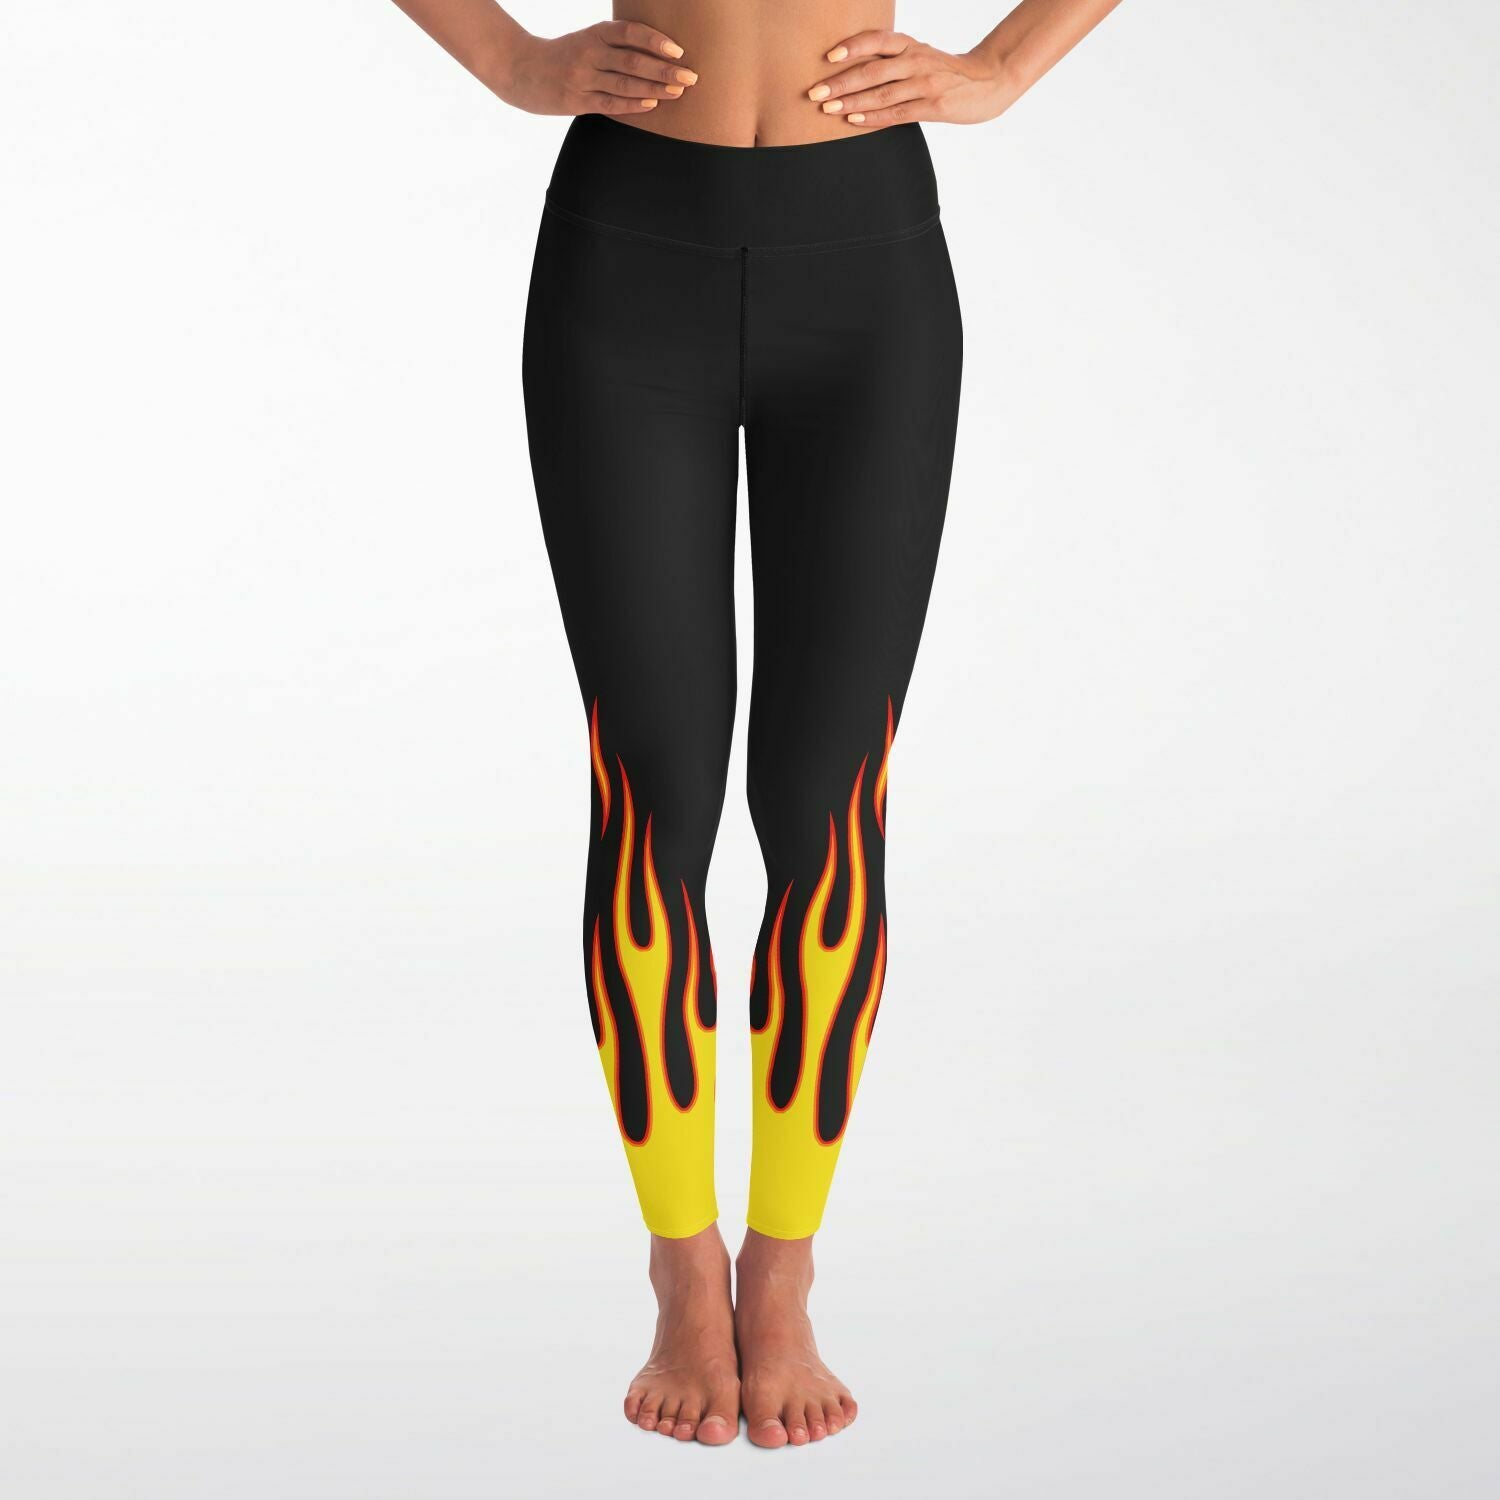 Women's Classic Hot Rod Fire Flames High-waisted Yoga Leggings